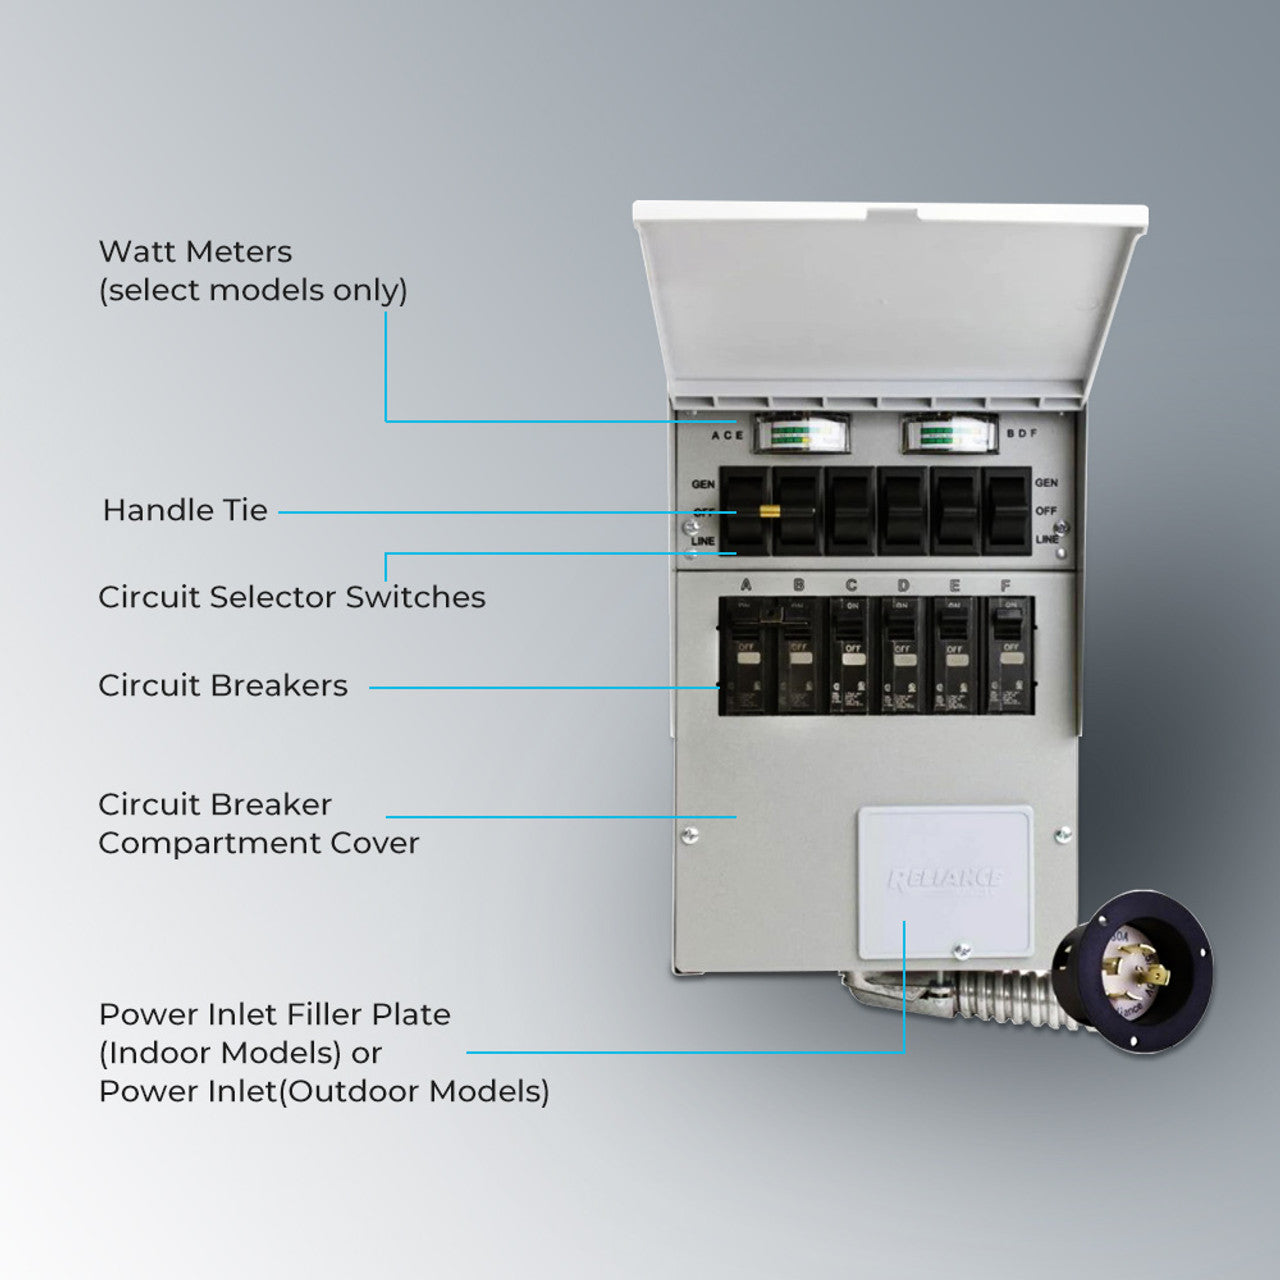 Reliance 30-Amp ProTran 2 Manual Transfer Switch